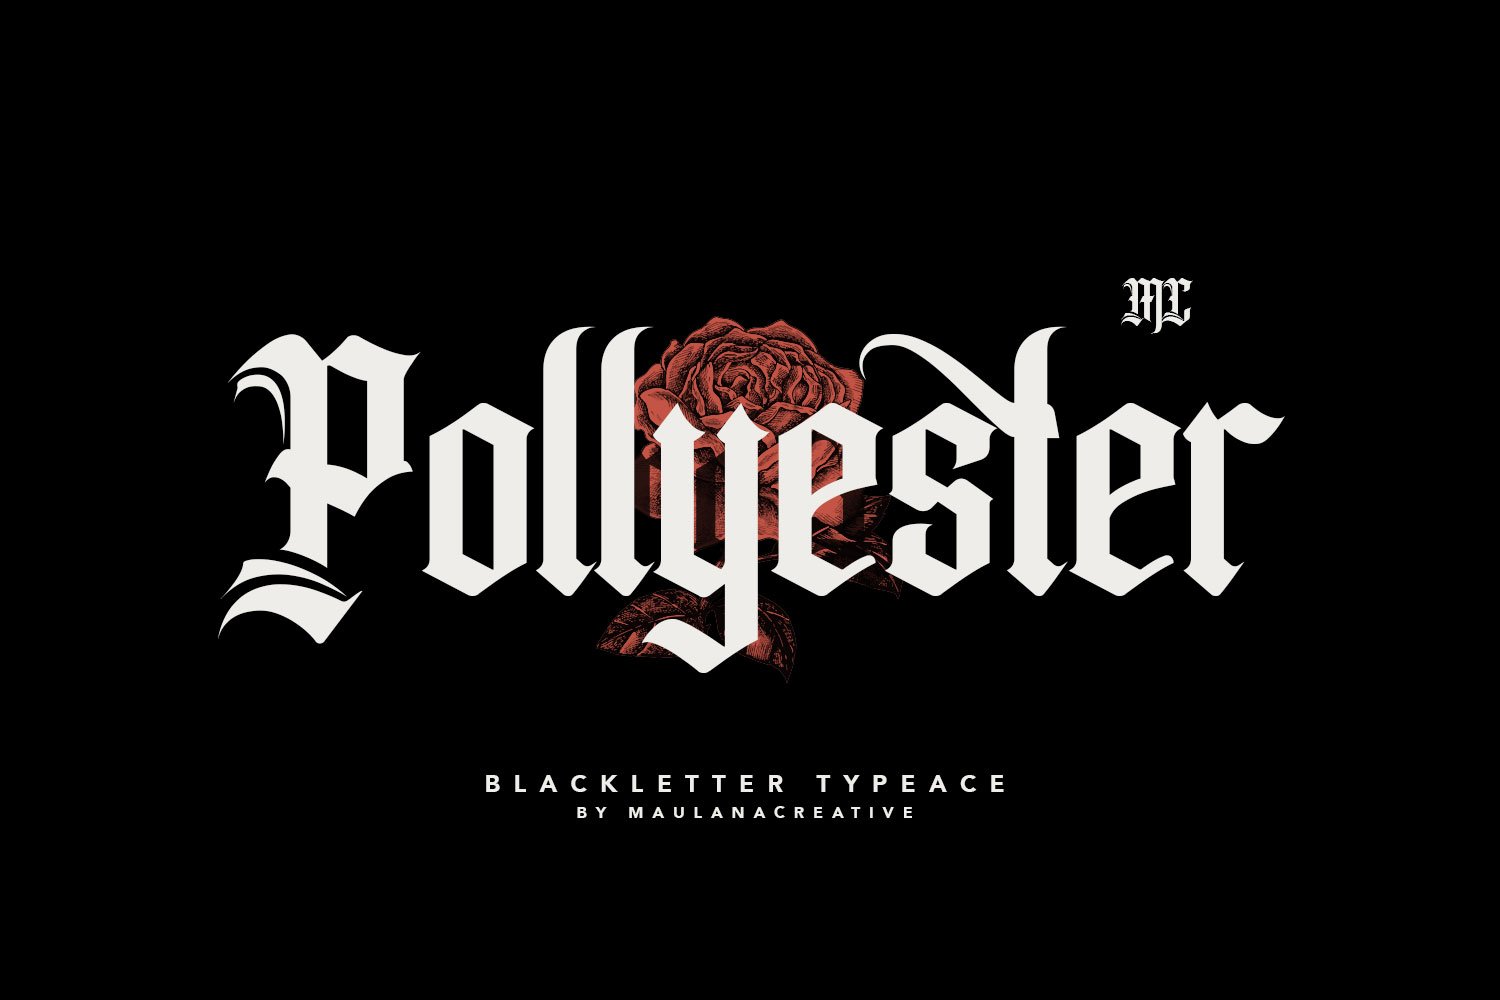 Pollyester Blackletter Typeface Font cover image.